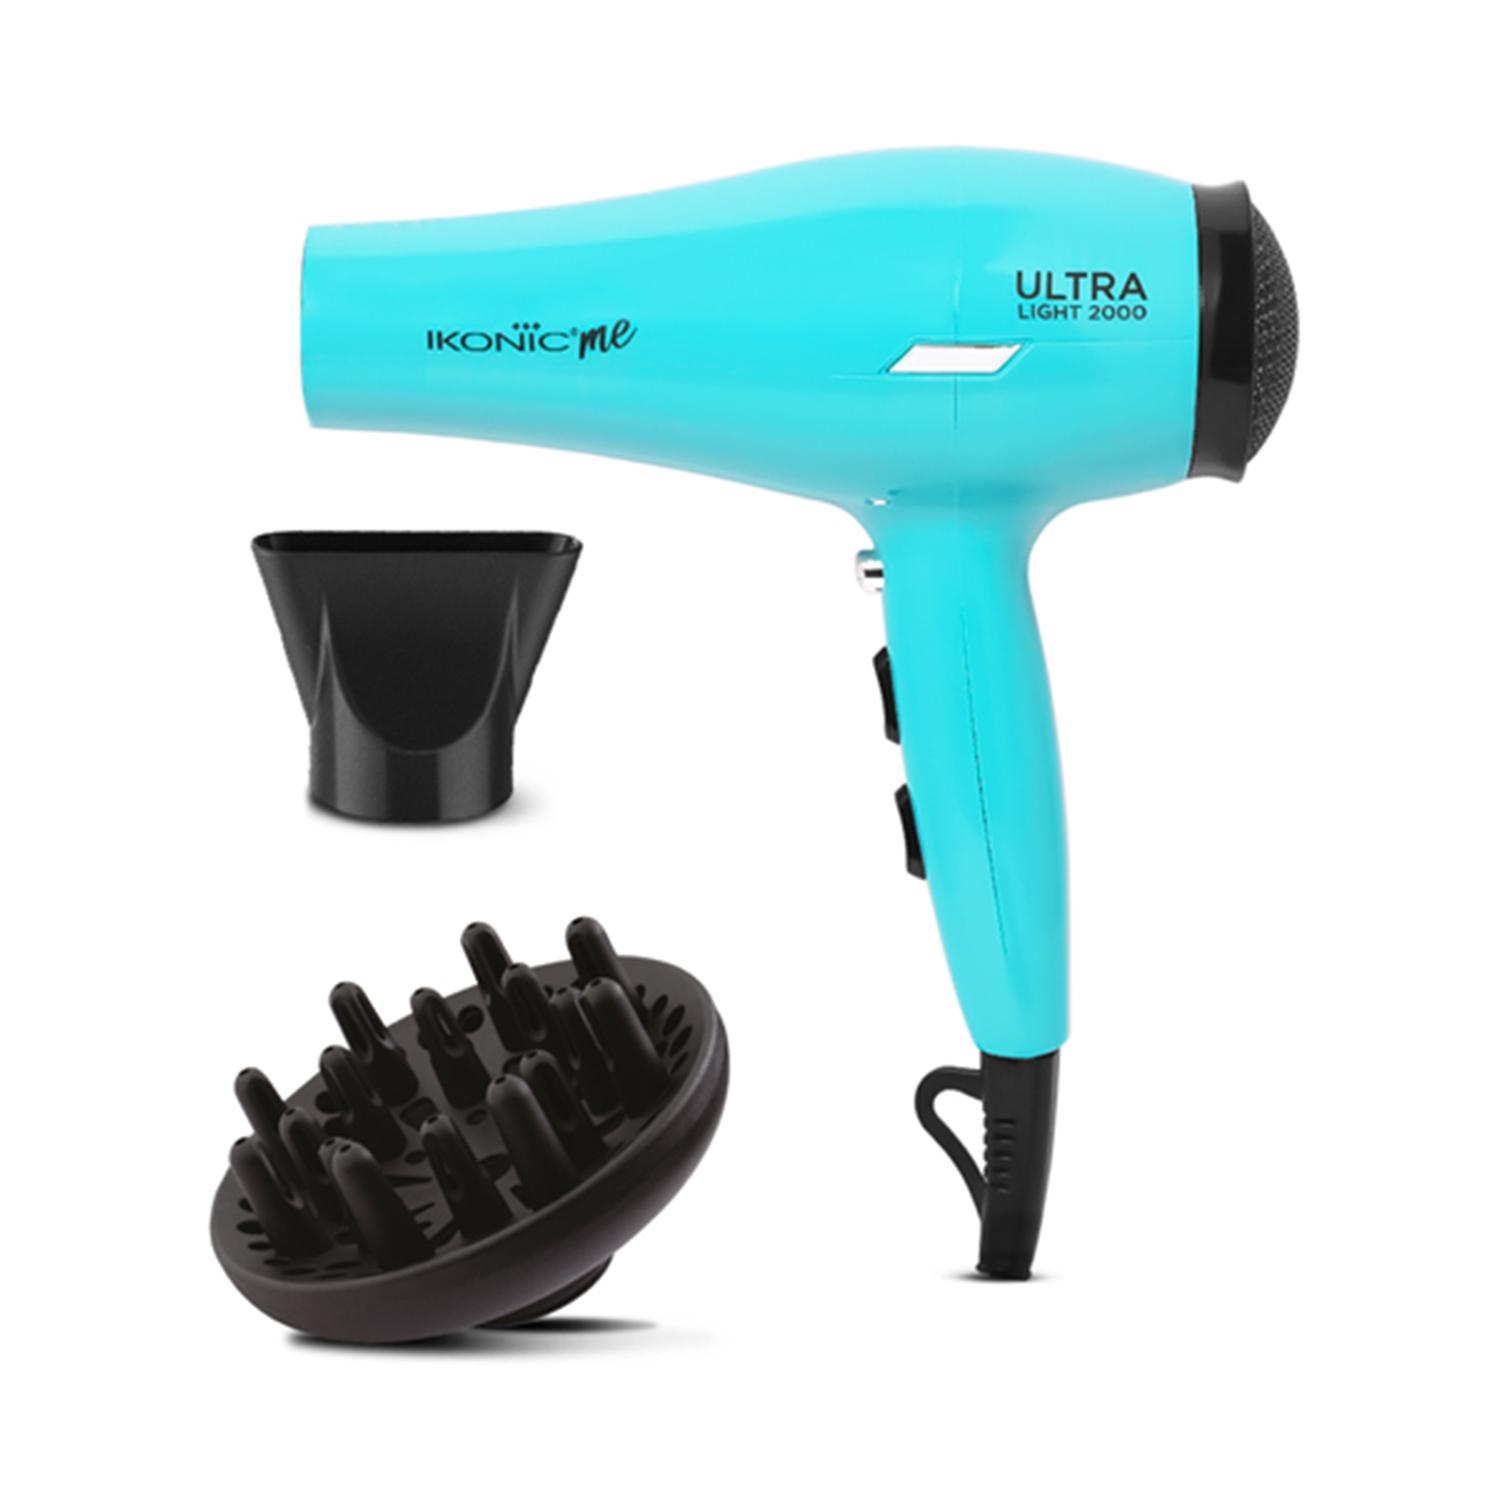 Ikonic Professional | Ikonic Professional Ultralight 2000 Hair Dryer - Teal (1 pc)